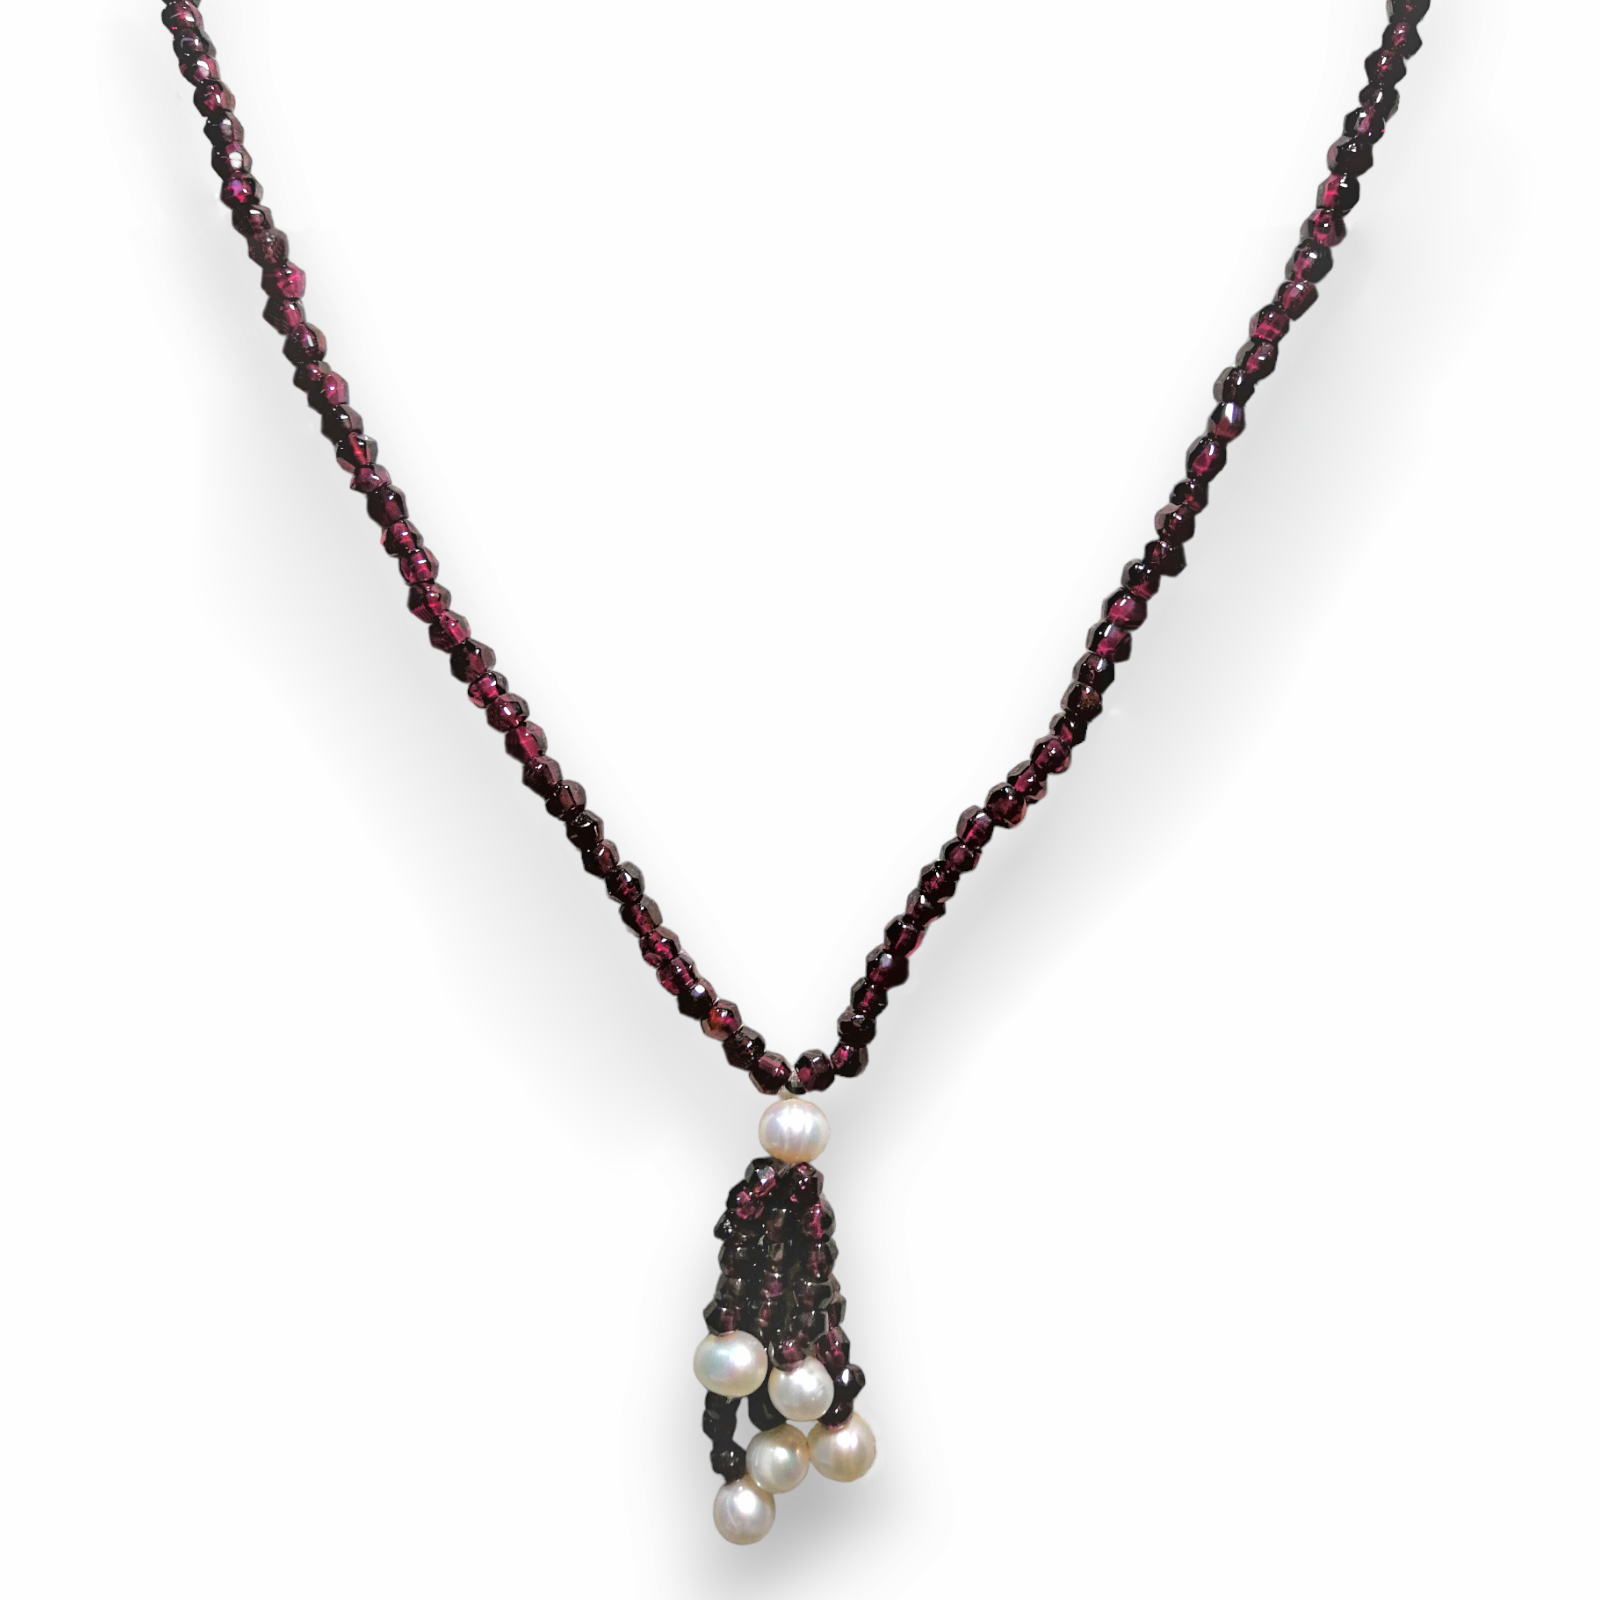 Natural Handmade Necklace 16"-18" Garnet Pearls Gemstone Beads Jewelry